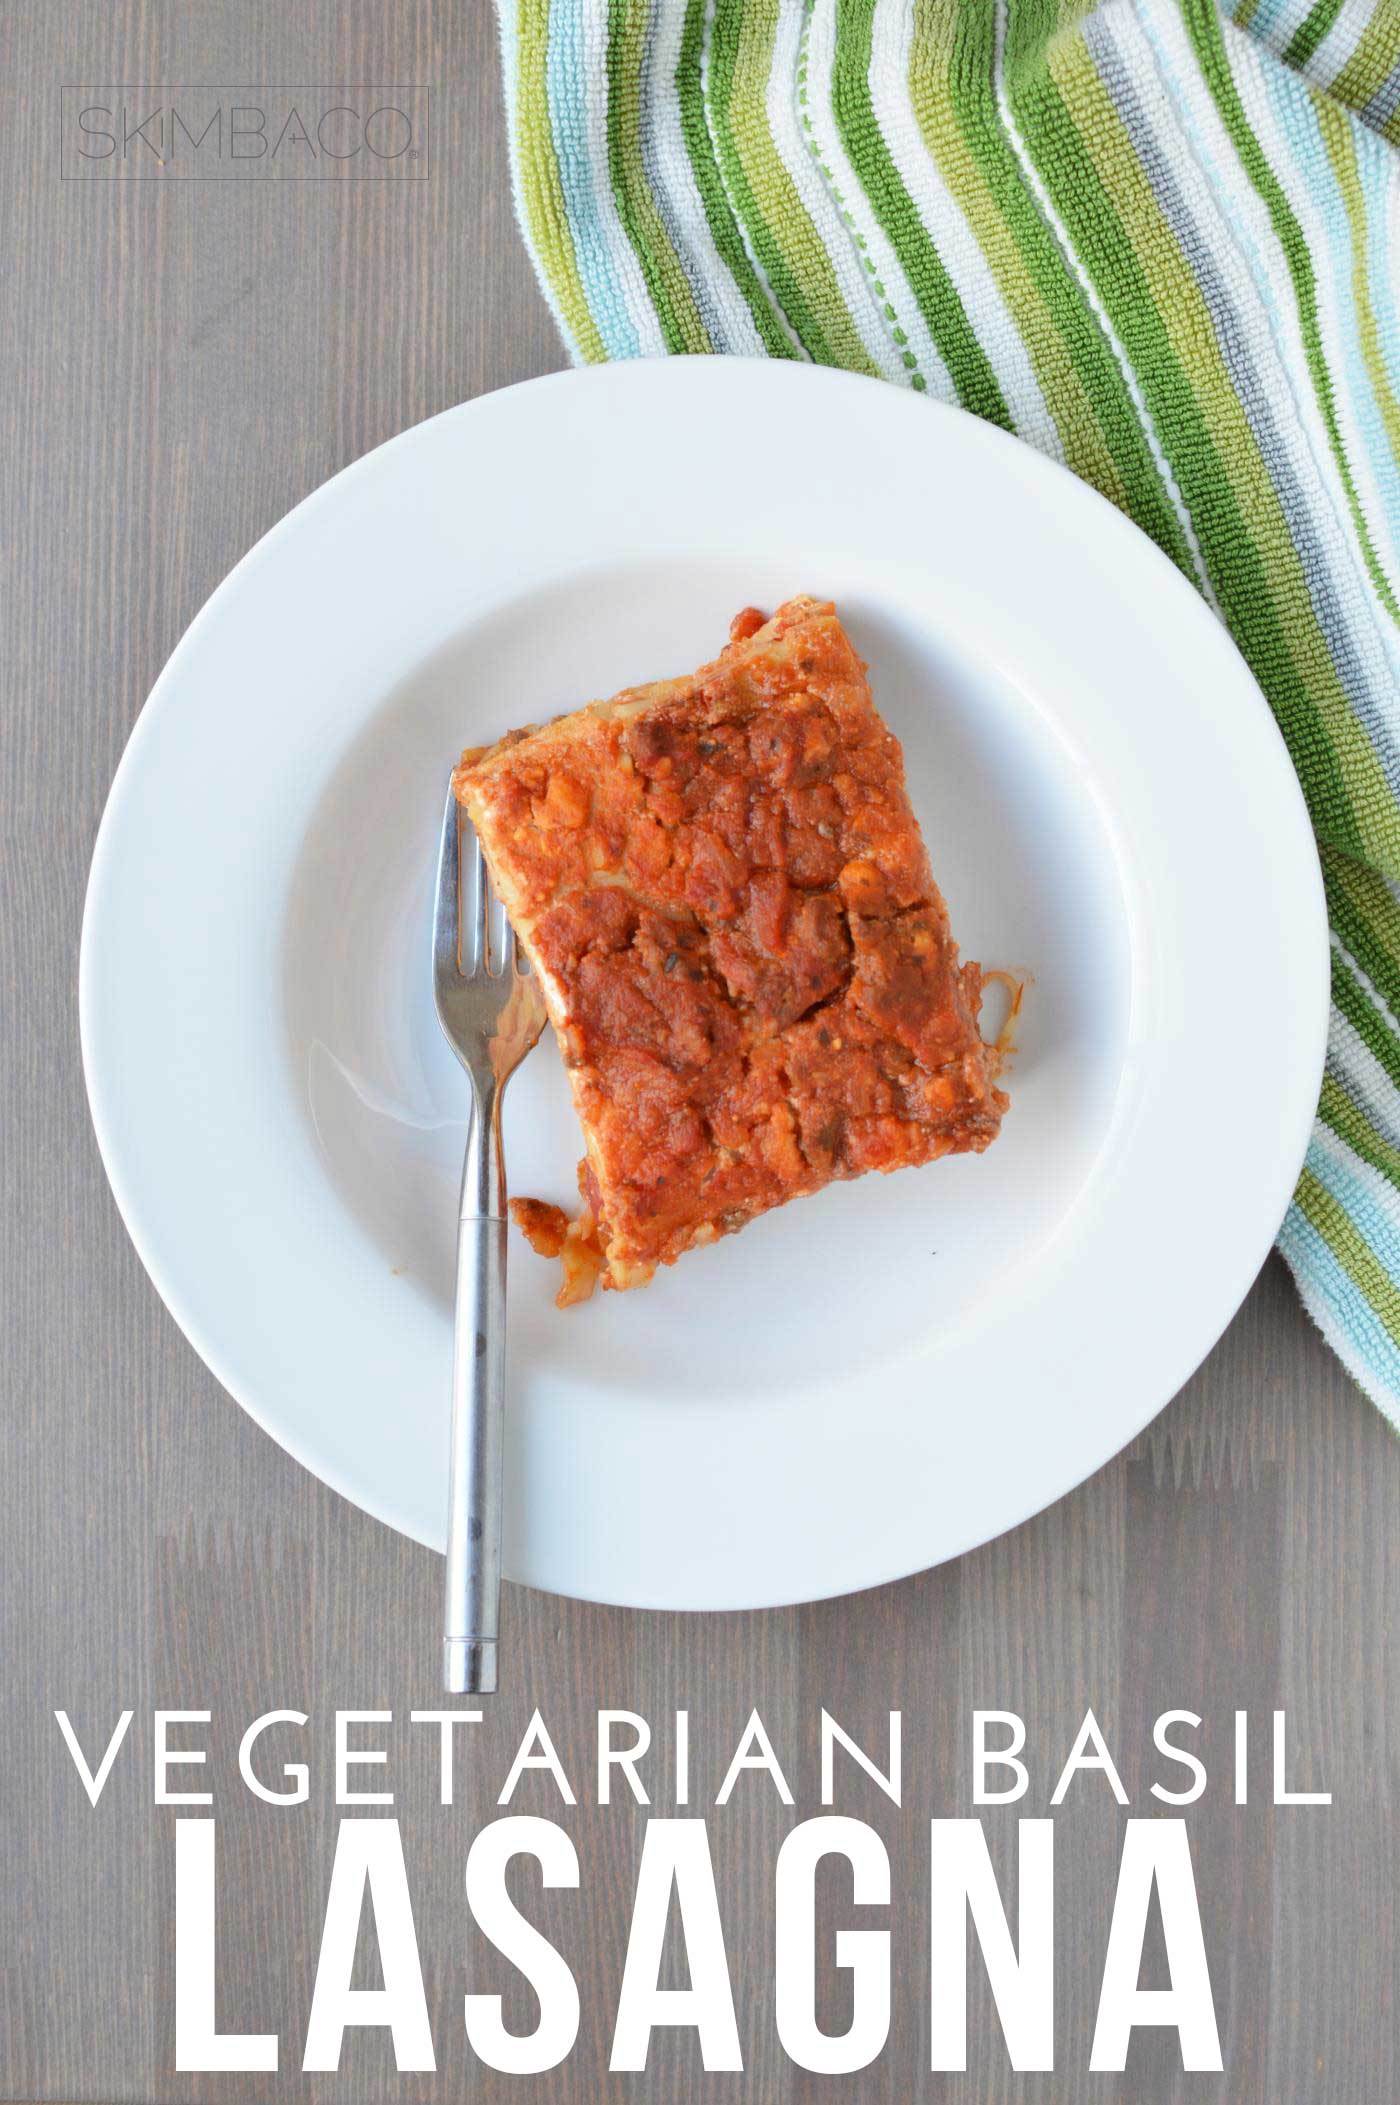 Vegetarian lasagna with basil essential oils. Recipe via @skimbaco